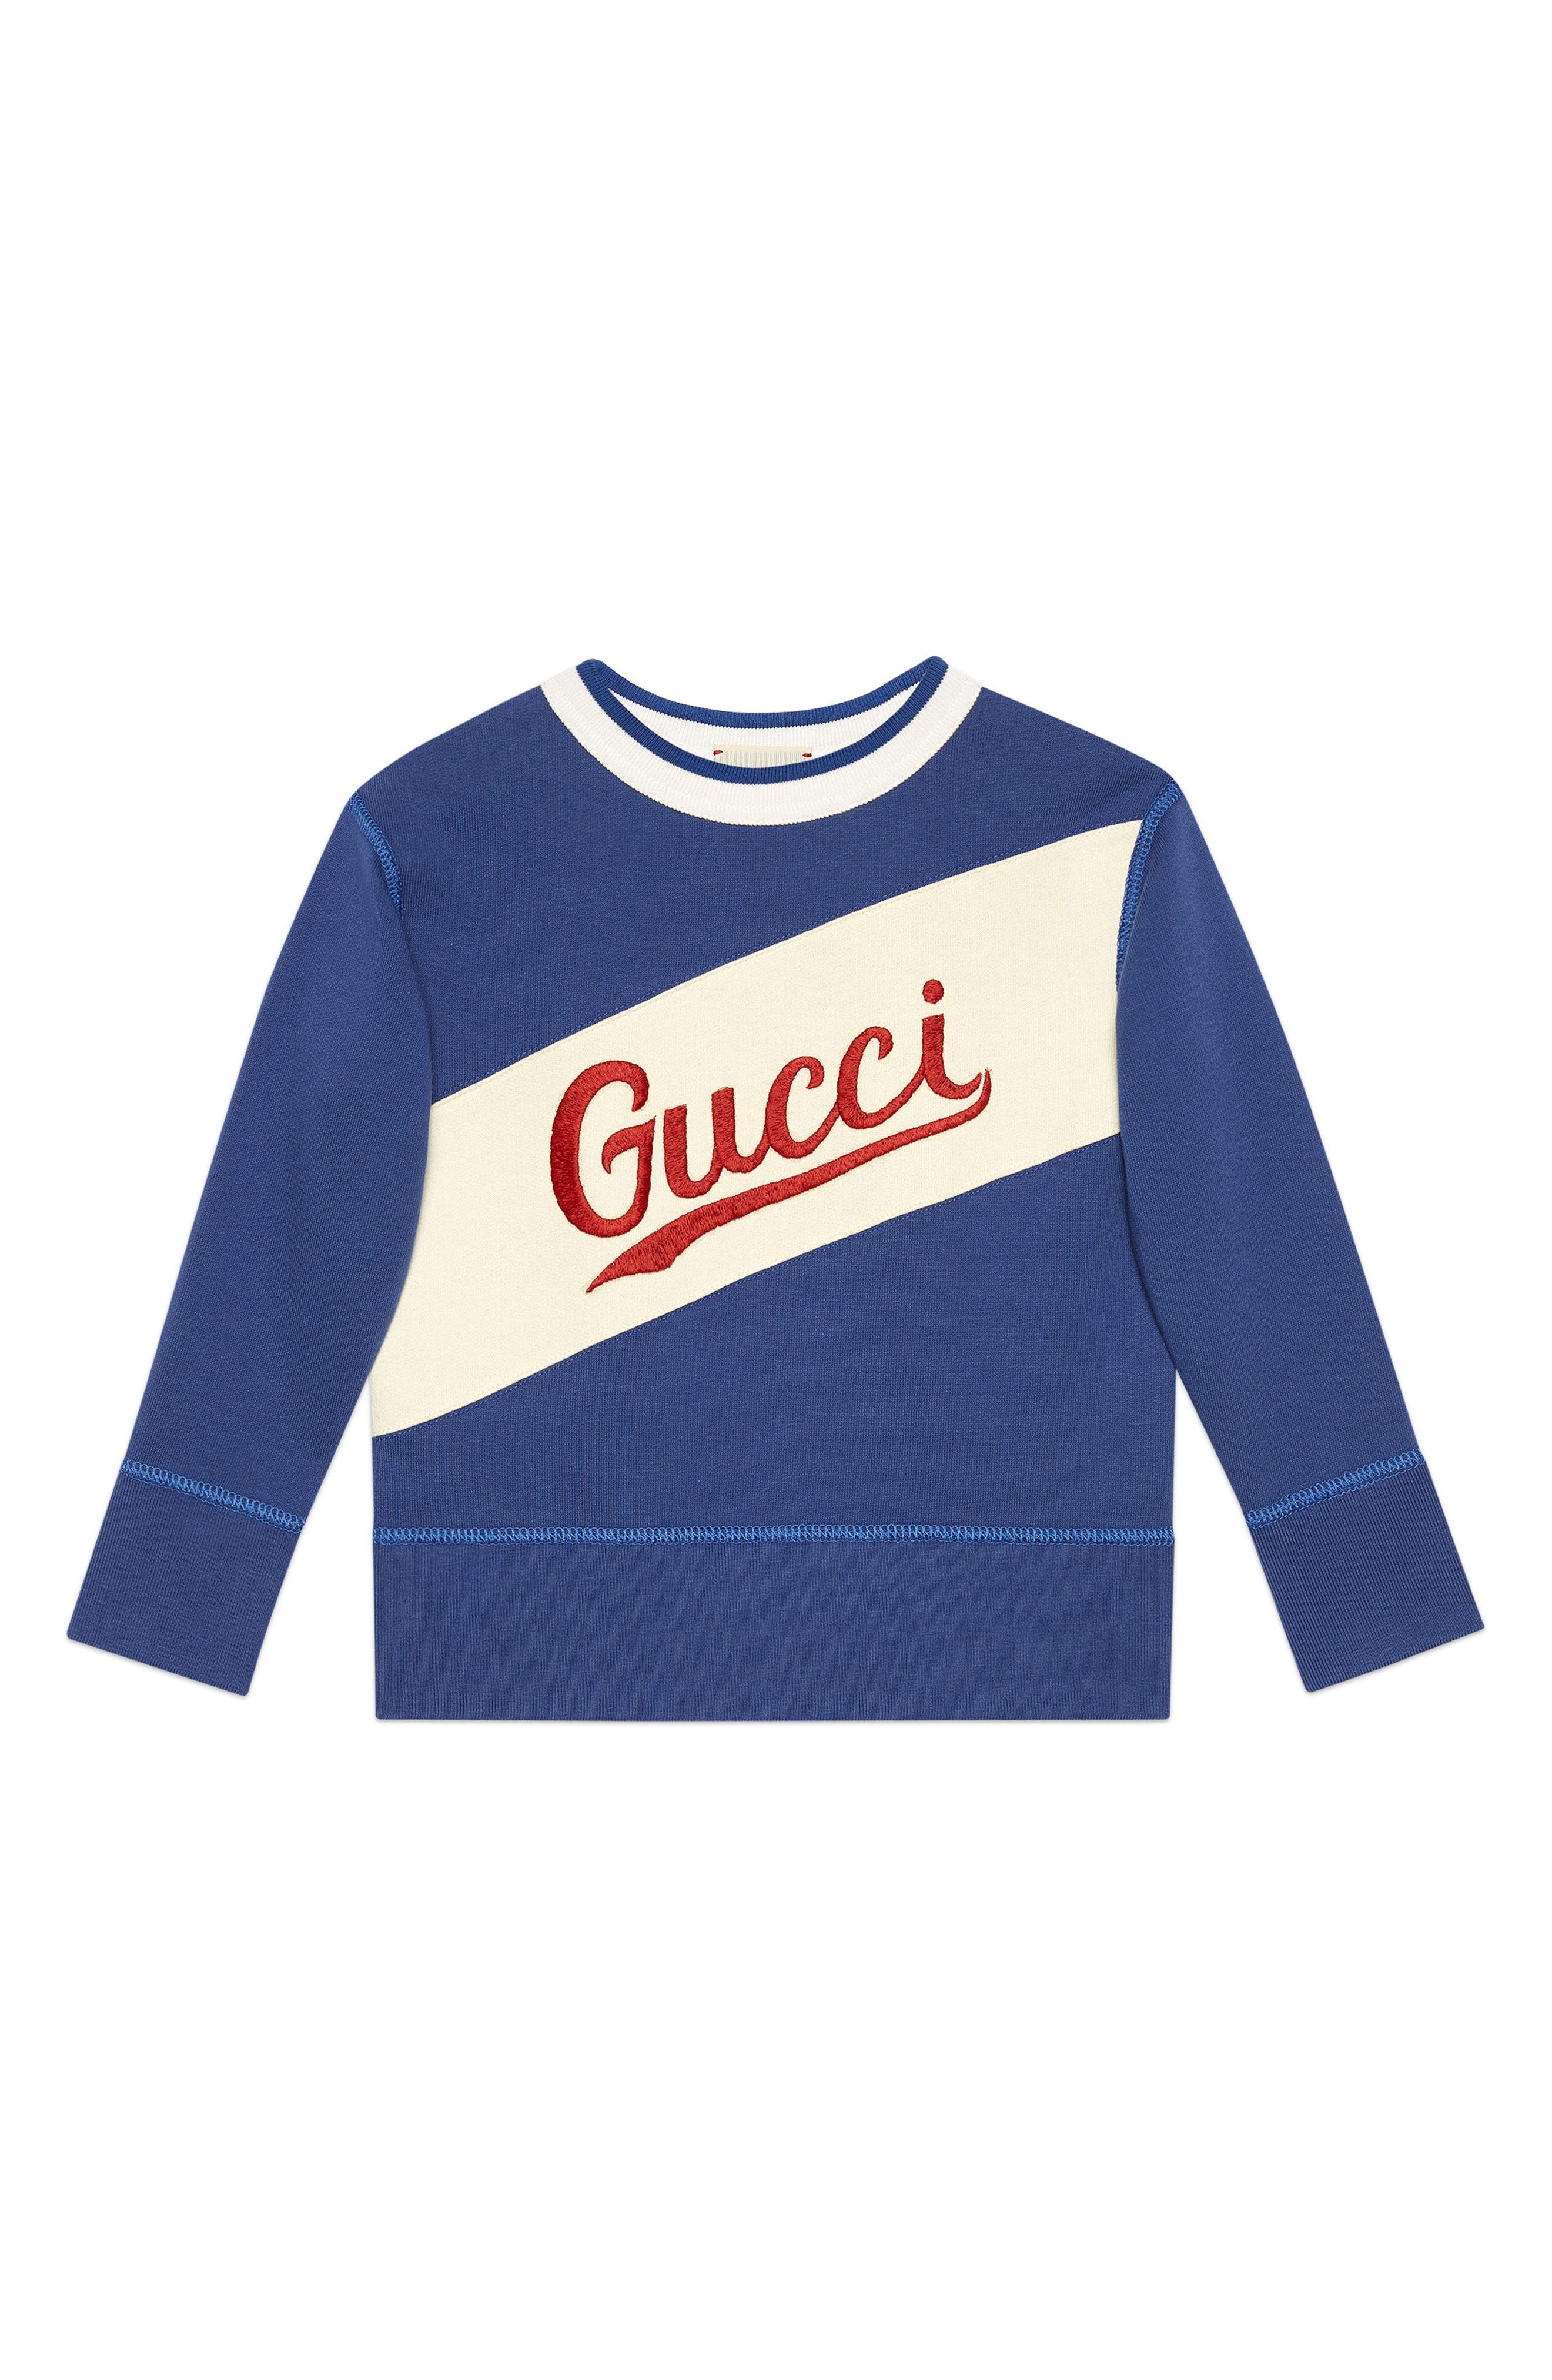 gucci shirts for boys